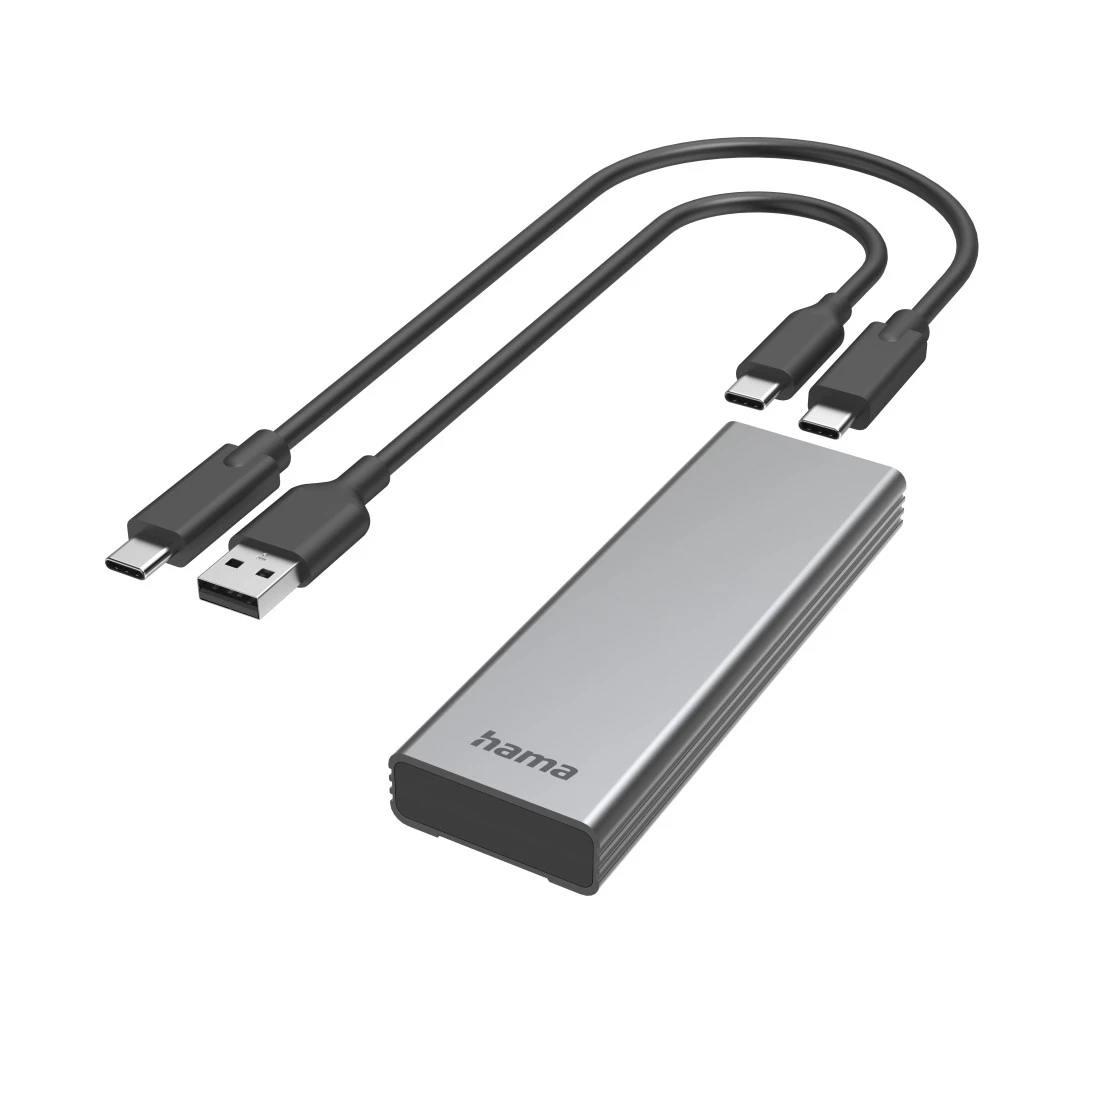 USB-Festplattengehäuse für M.2 SATA & NVMe SSD-Festplatten | Hama